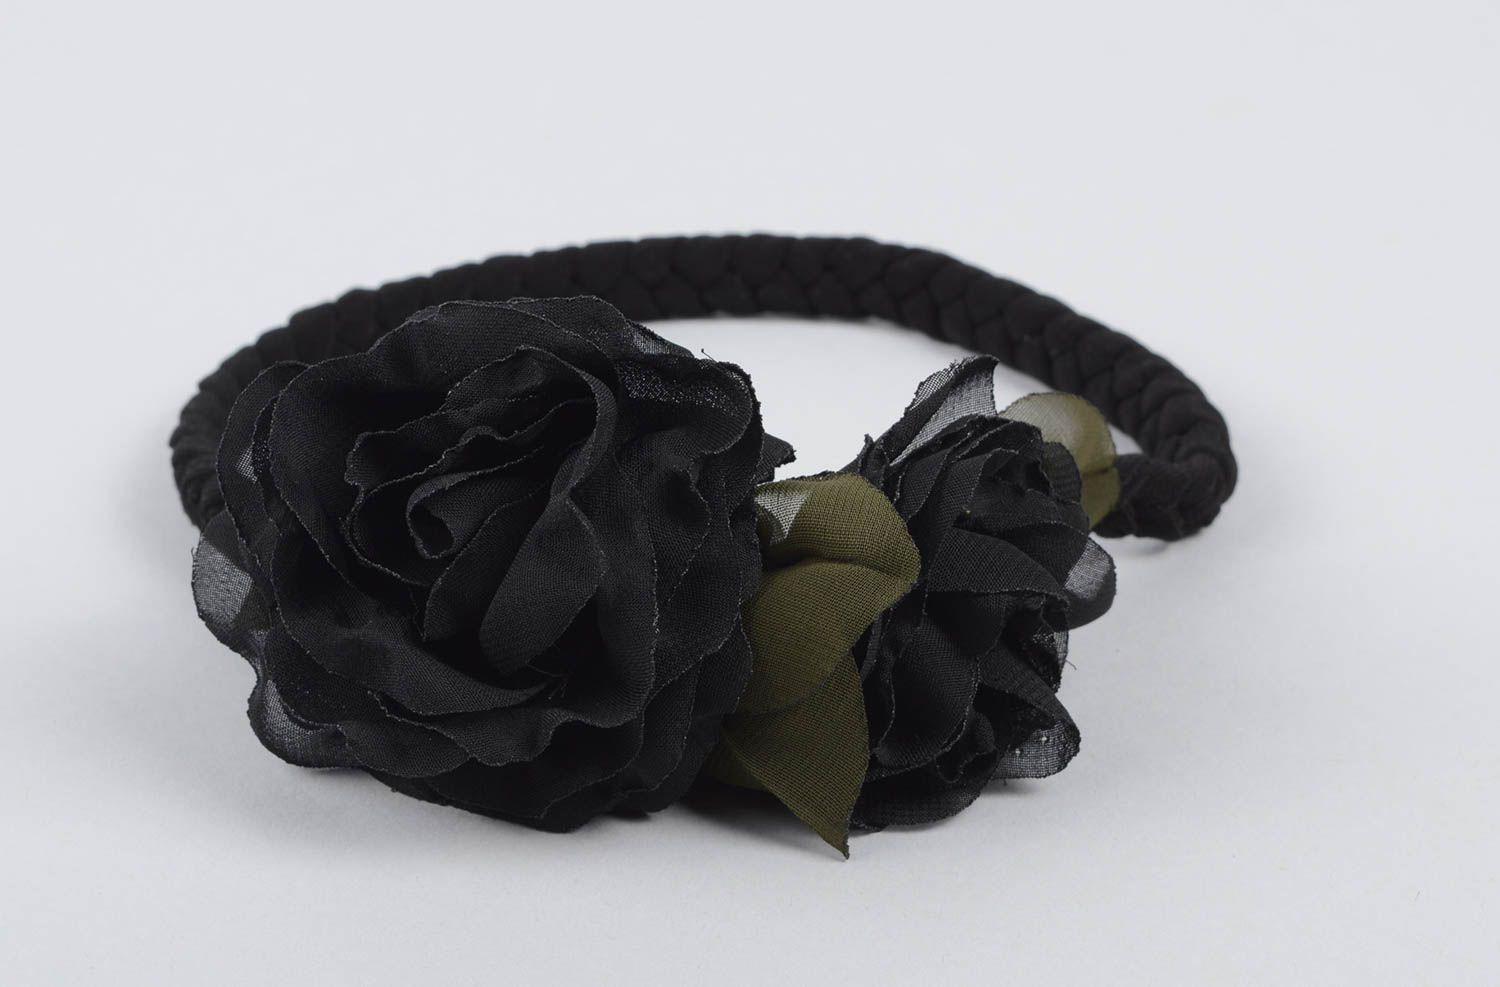 Stylish handmade flower headband accessories for girls hair ornaments ideas photo 1